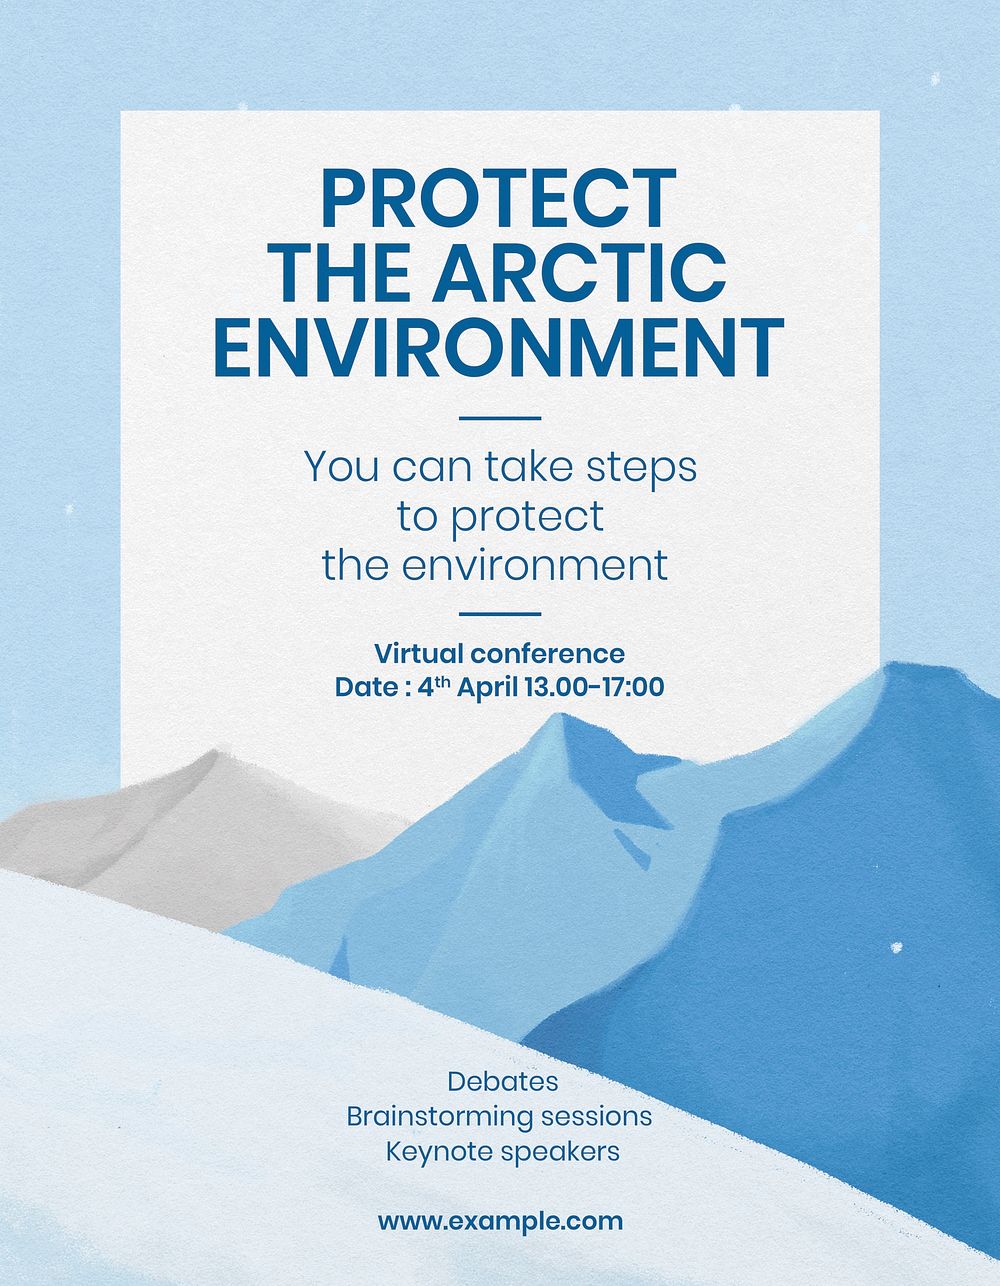 Arctic environment flyer template, winter landscape illustration psd